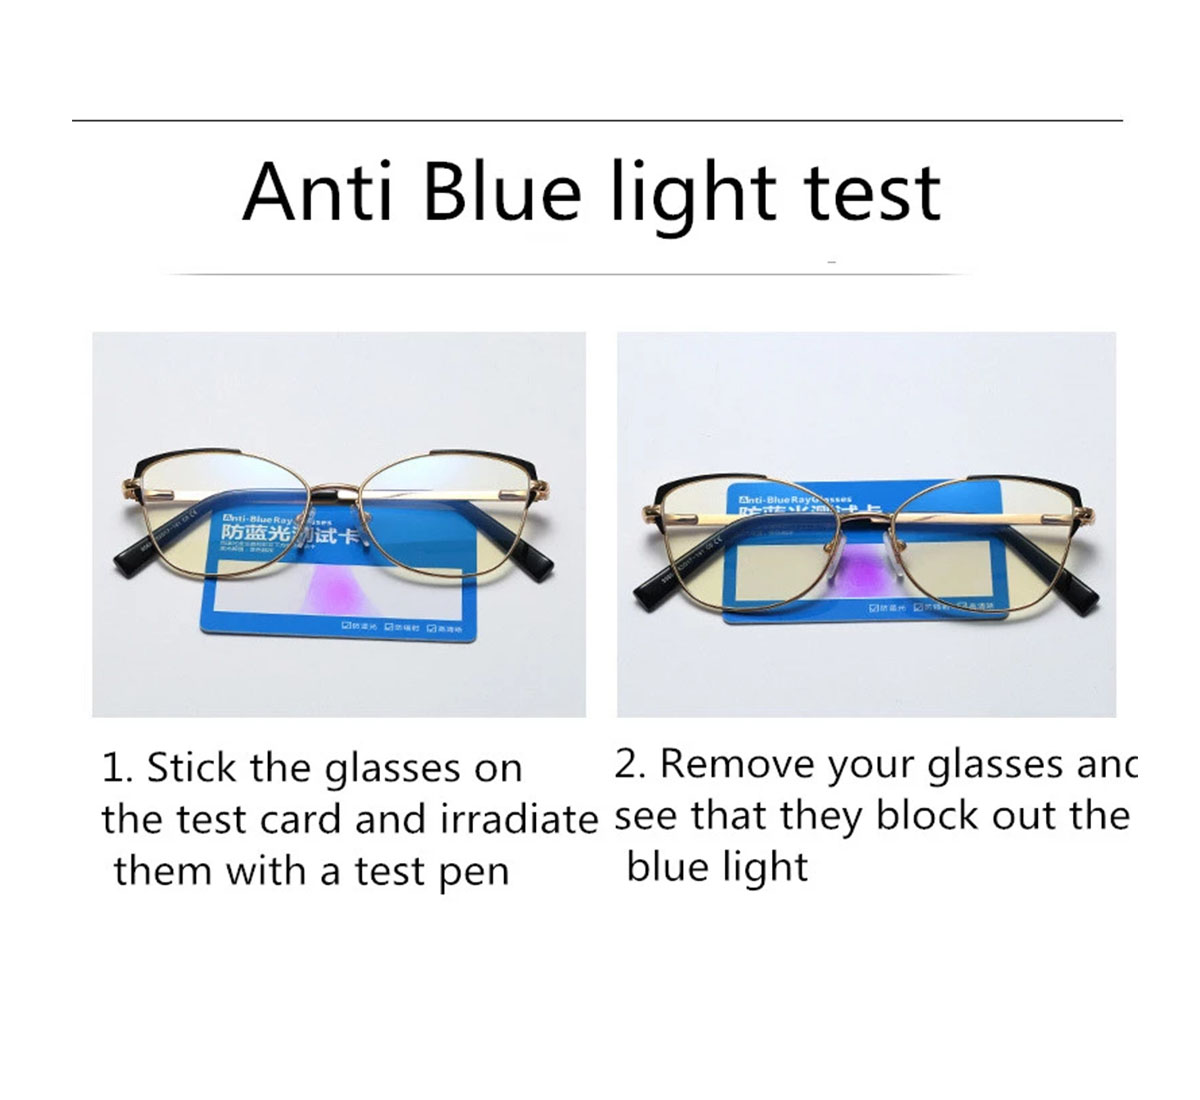 Is it safe to wear anti blue light glasses?